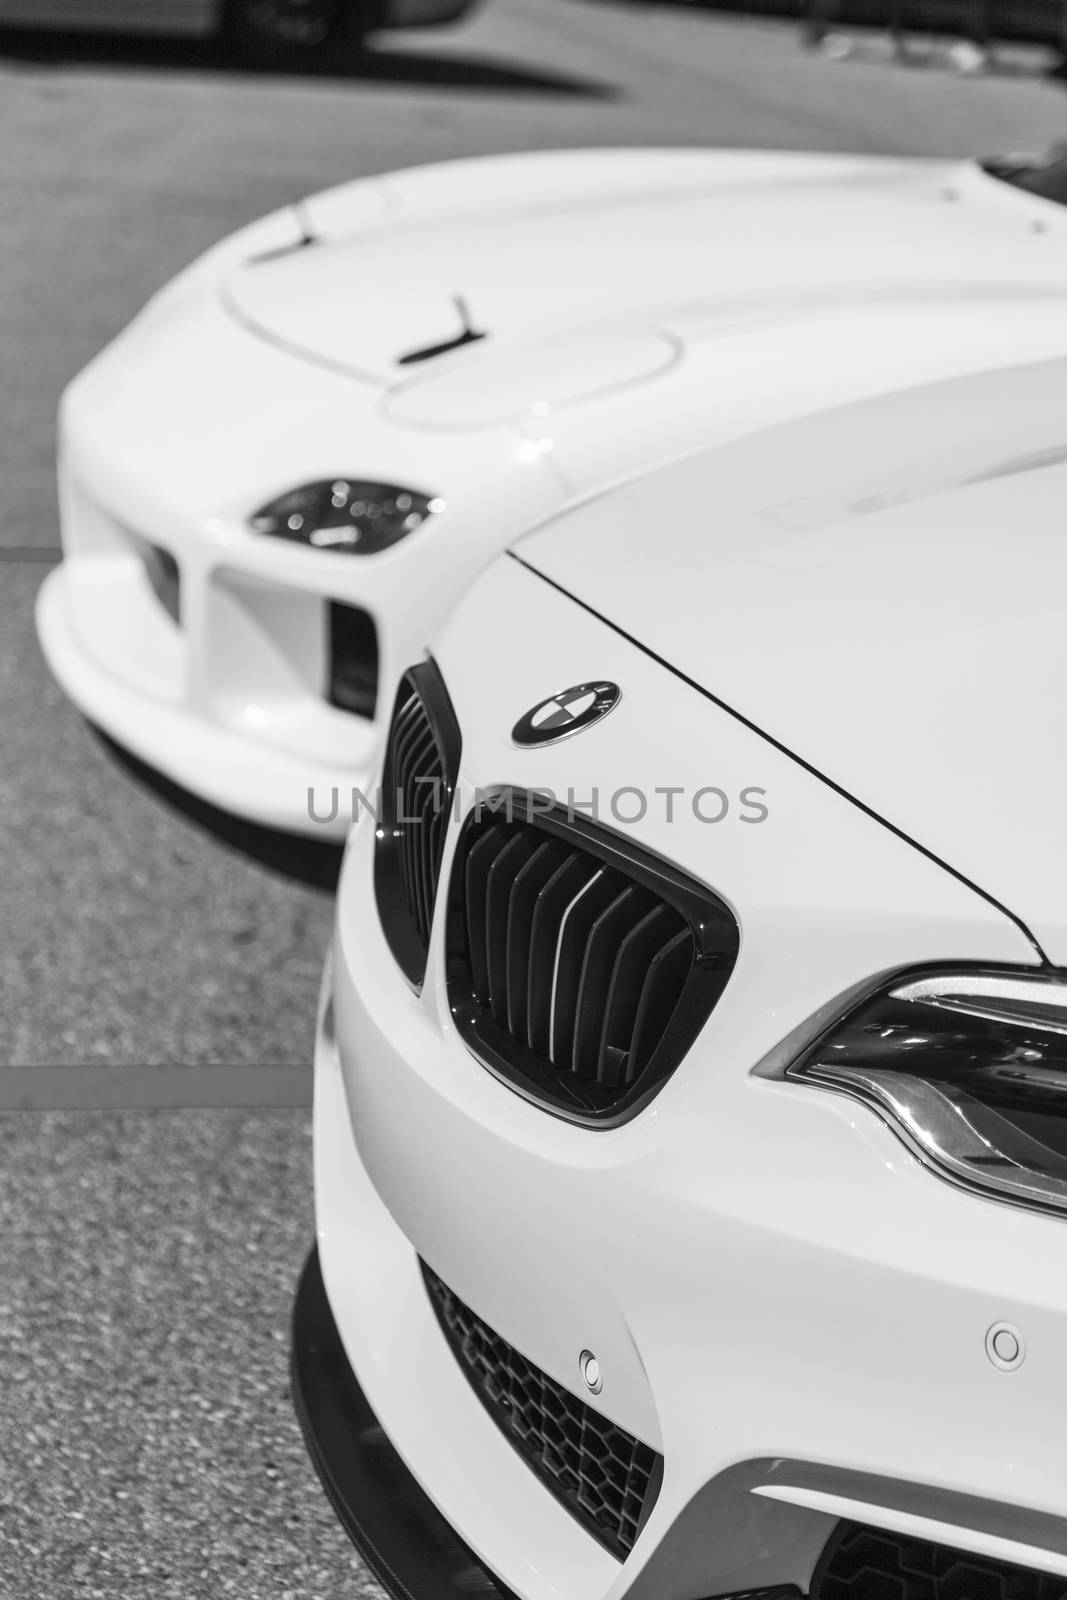 Hot Import Cars by Imagecom